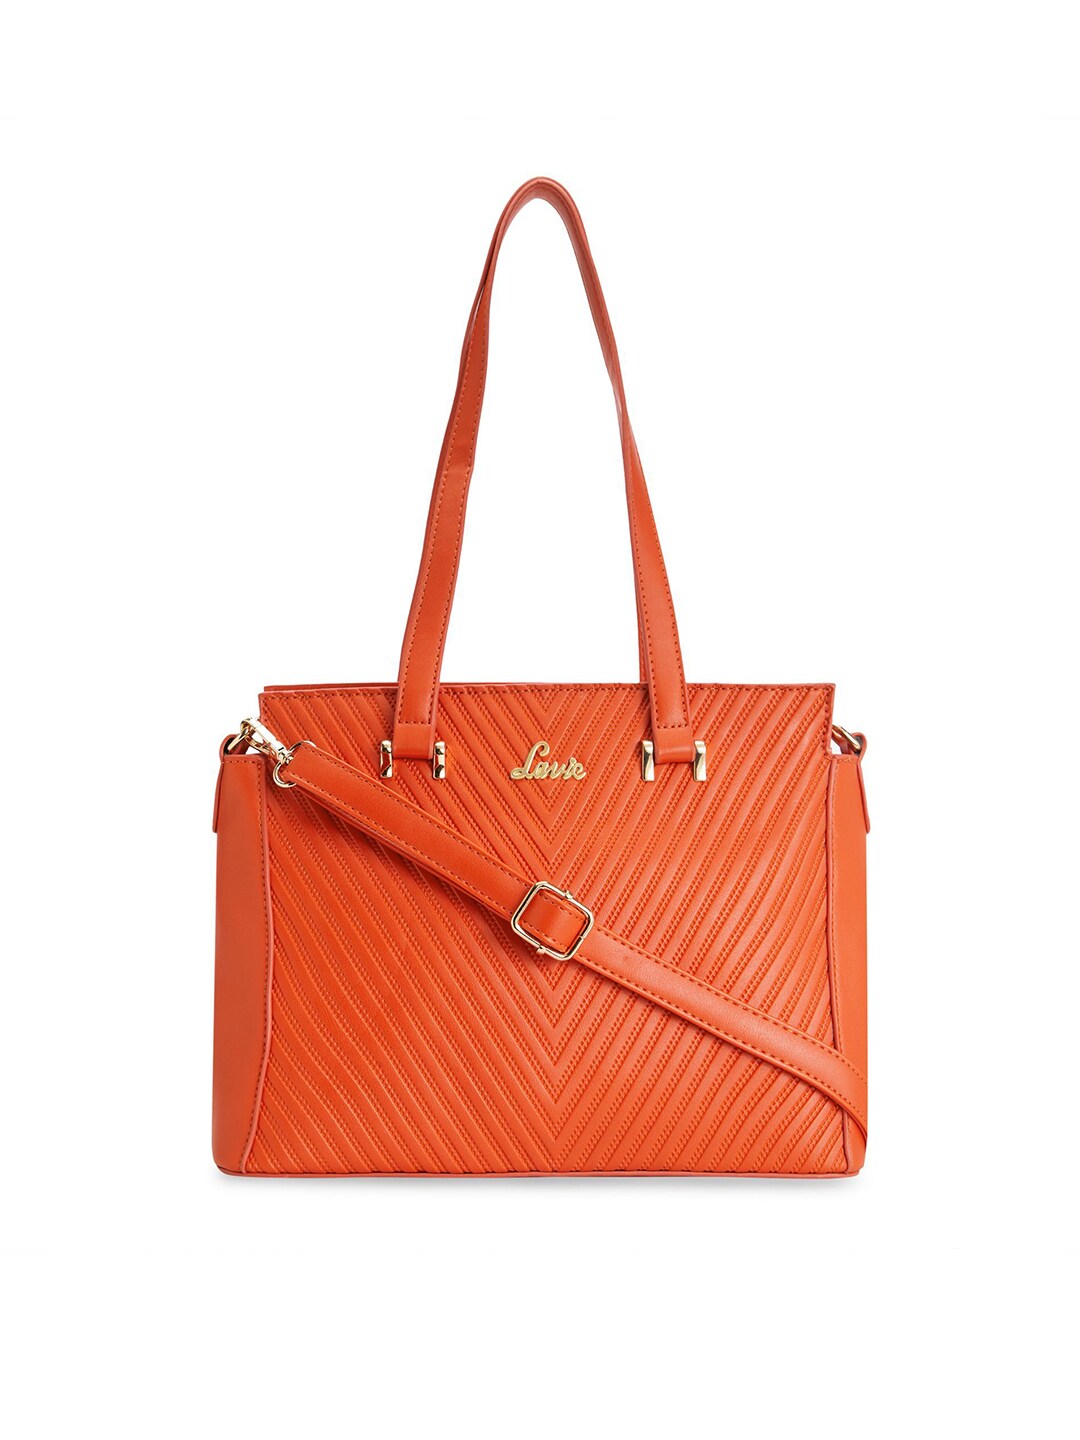 Lavie Orange Textured Shoulder Bag Price in India